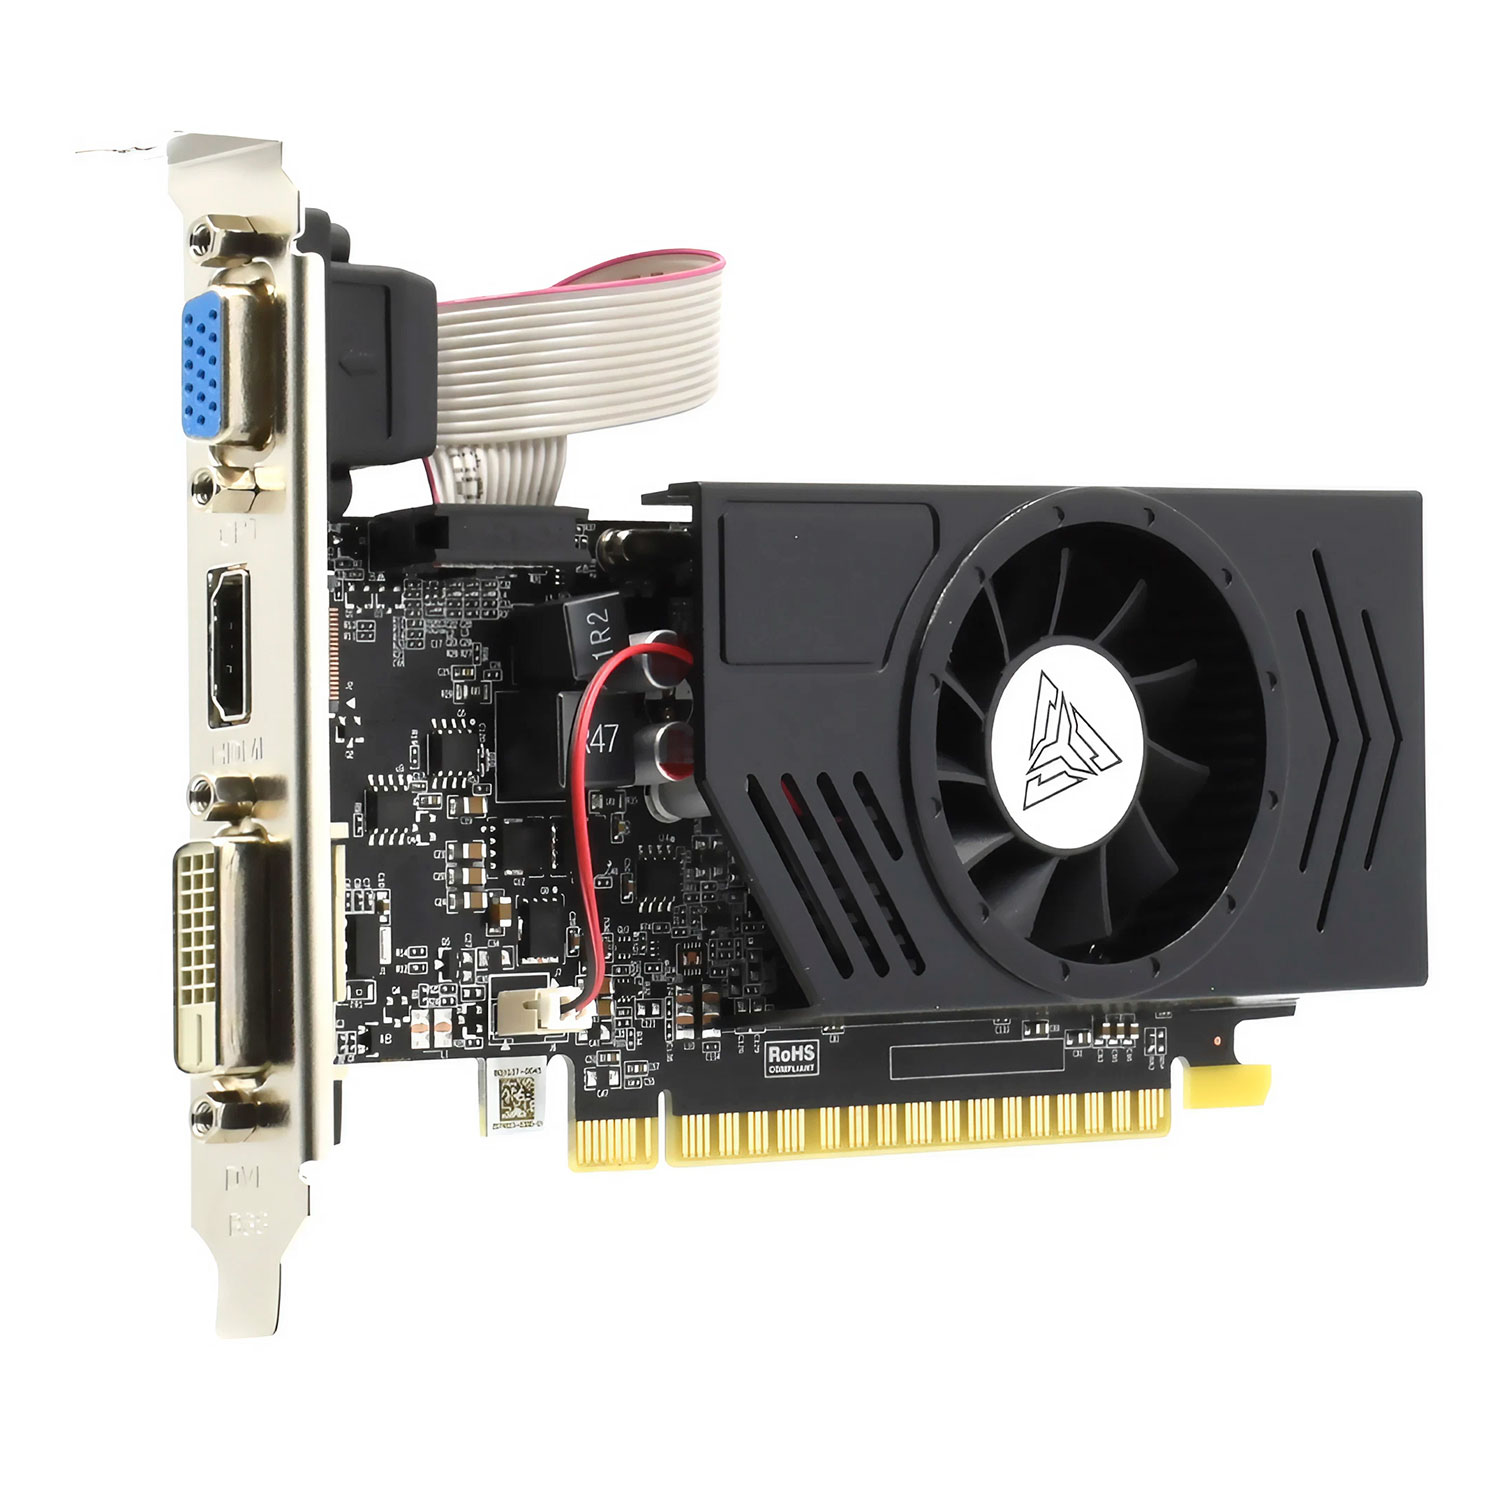 Placa de Vídeo Arktek NVIDIA GeForce GT-740 2GB DDR3 - AKN740D3S2GL1